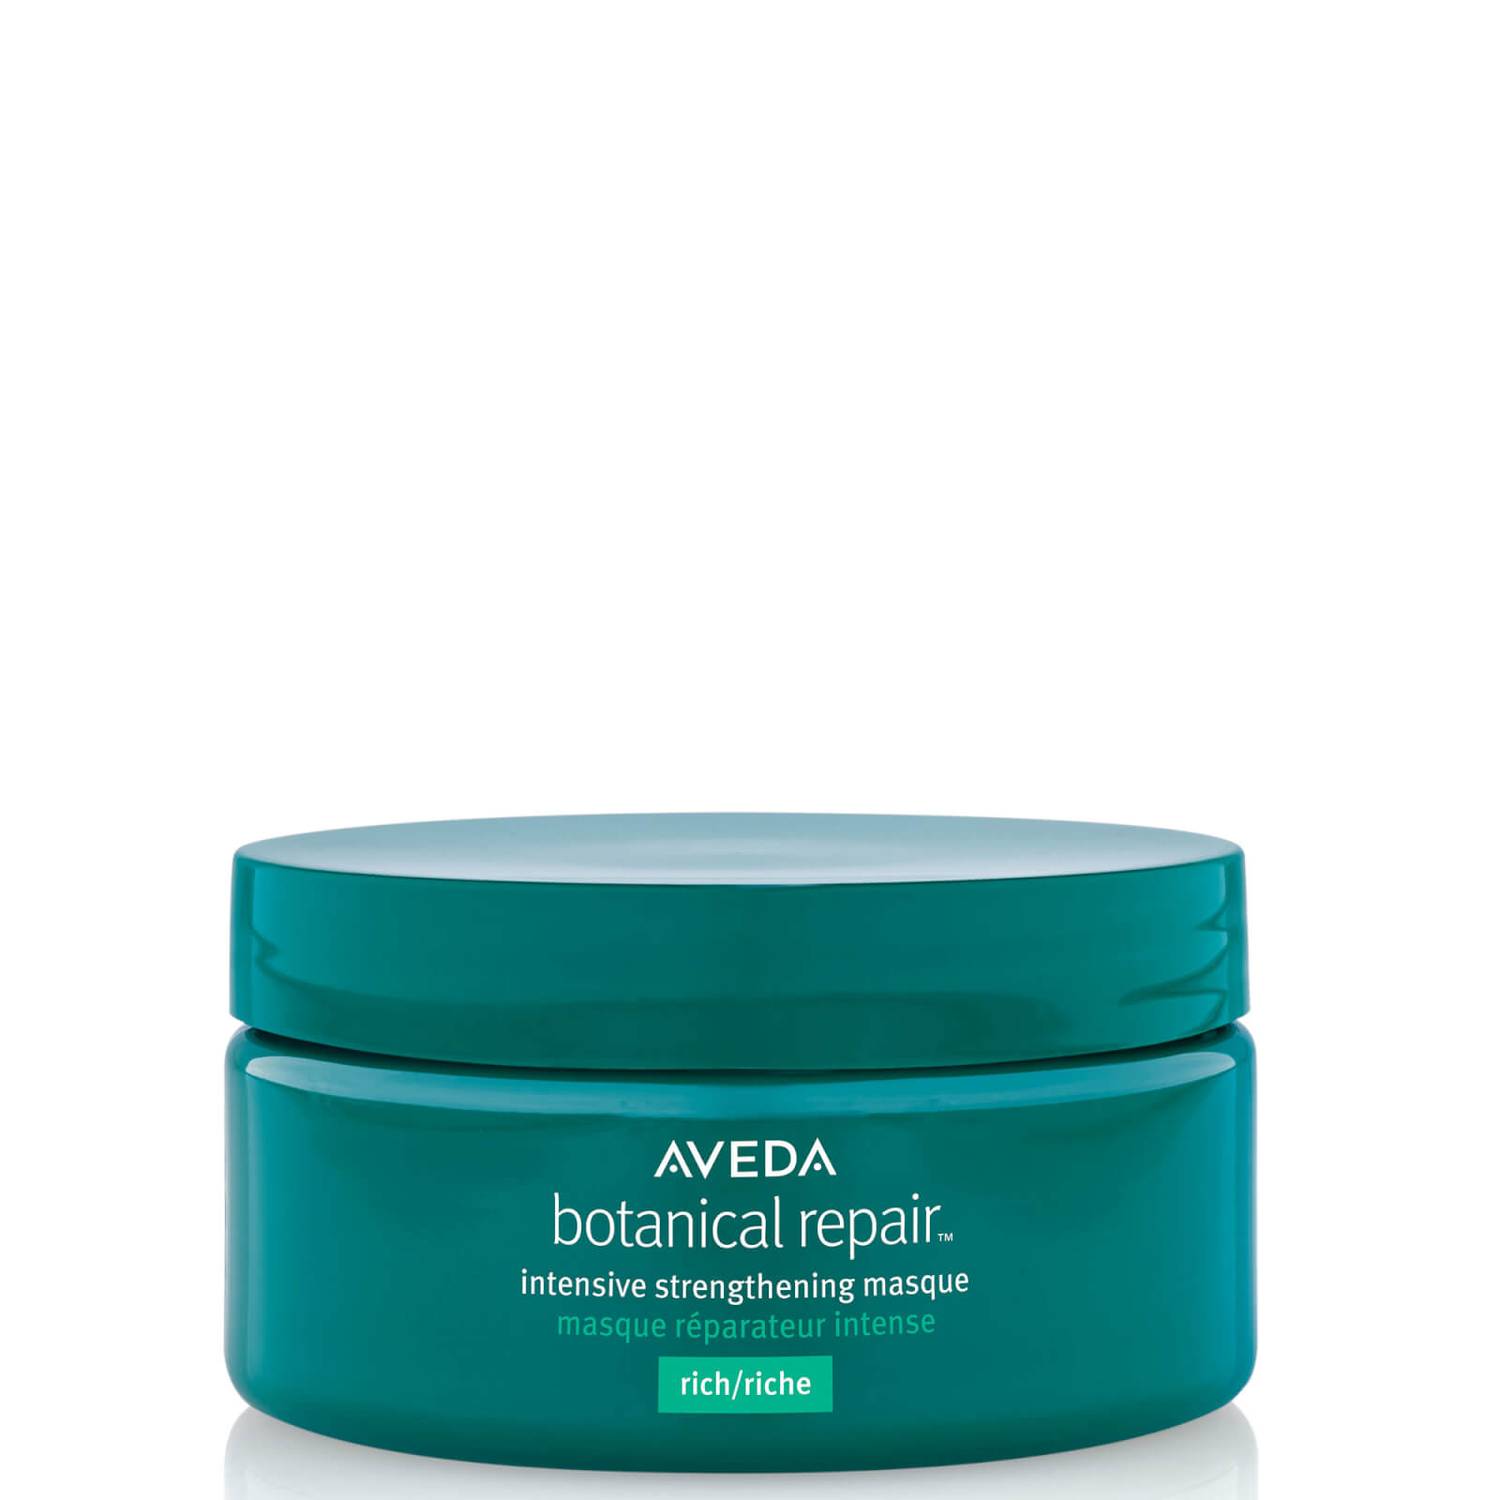 Aveda Botanical Repair Intensive Strengthening Masque Rich - 450ml - Glow Addict Luxe